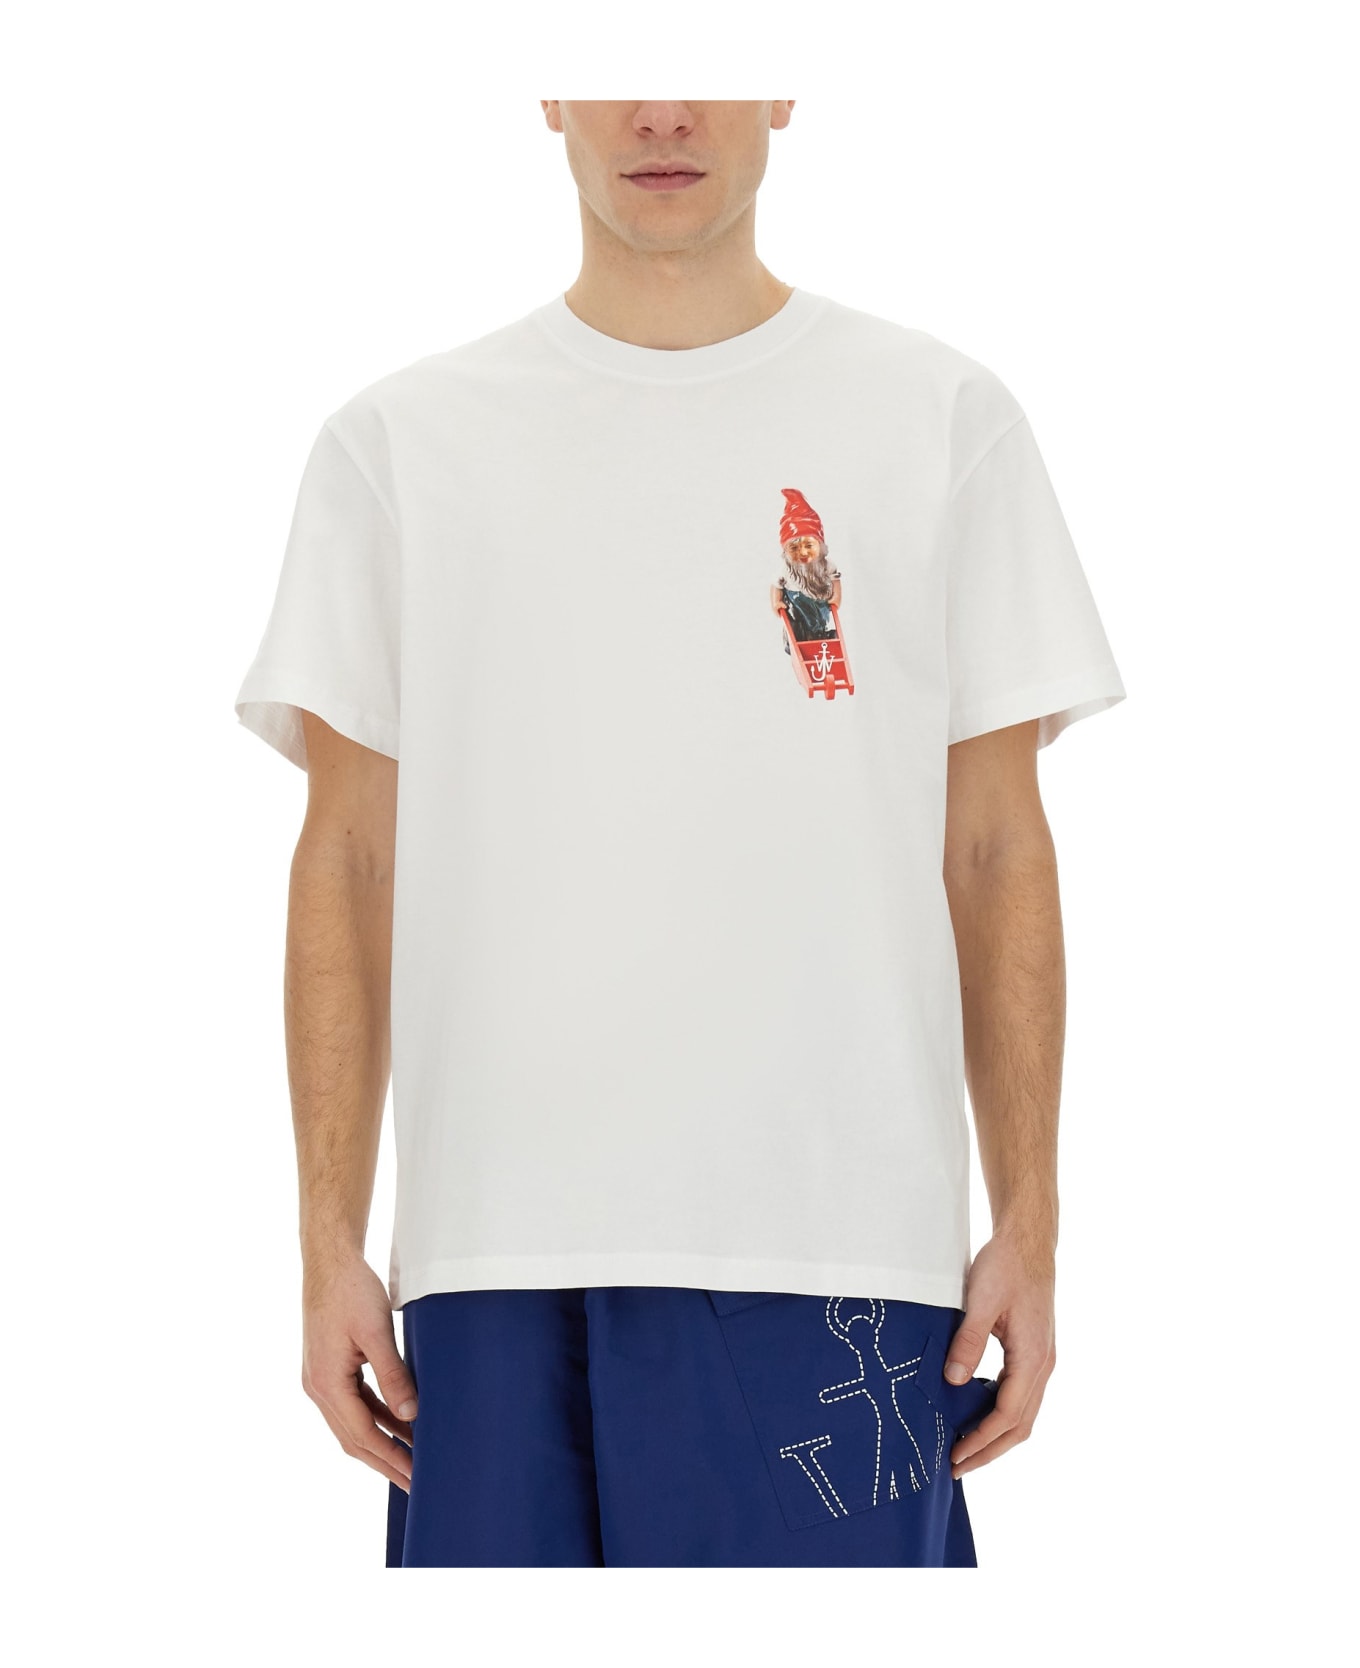 J.W. Anderson T-shirt 'gnome' - White